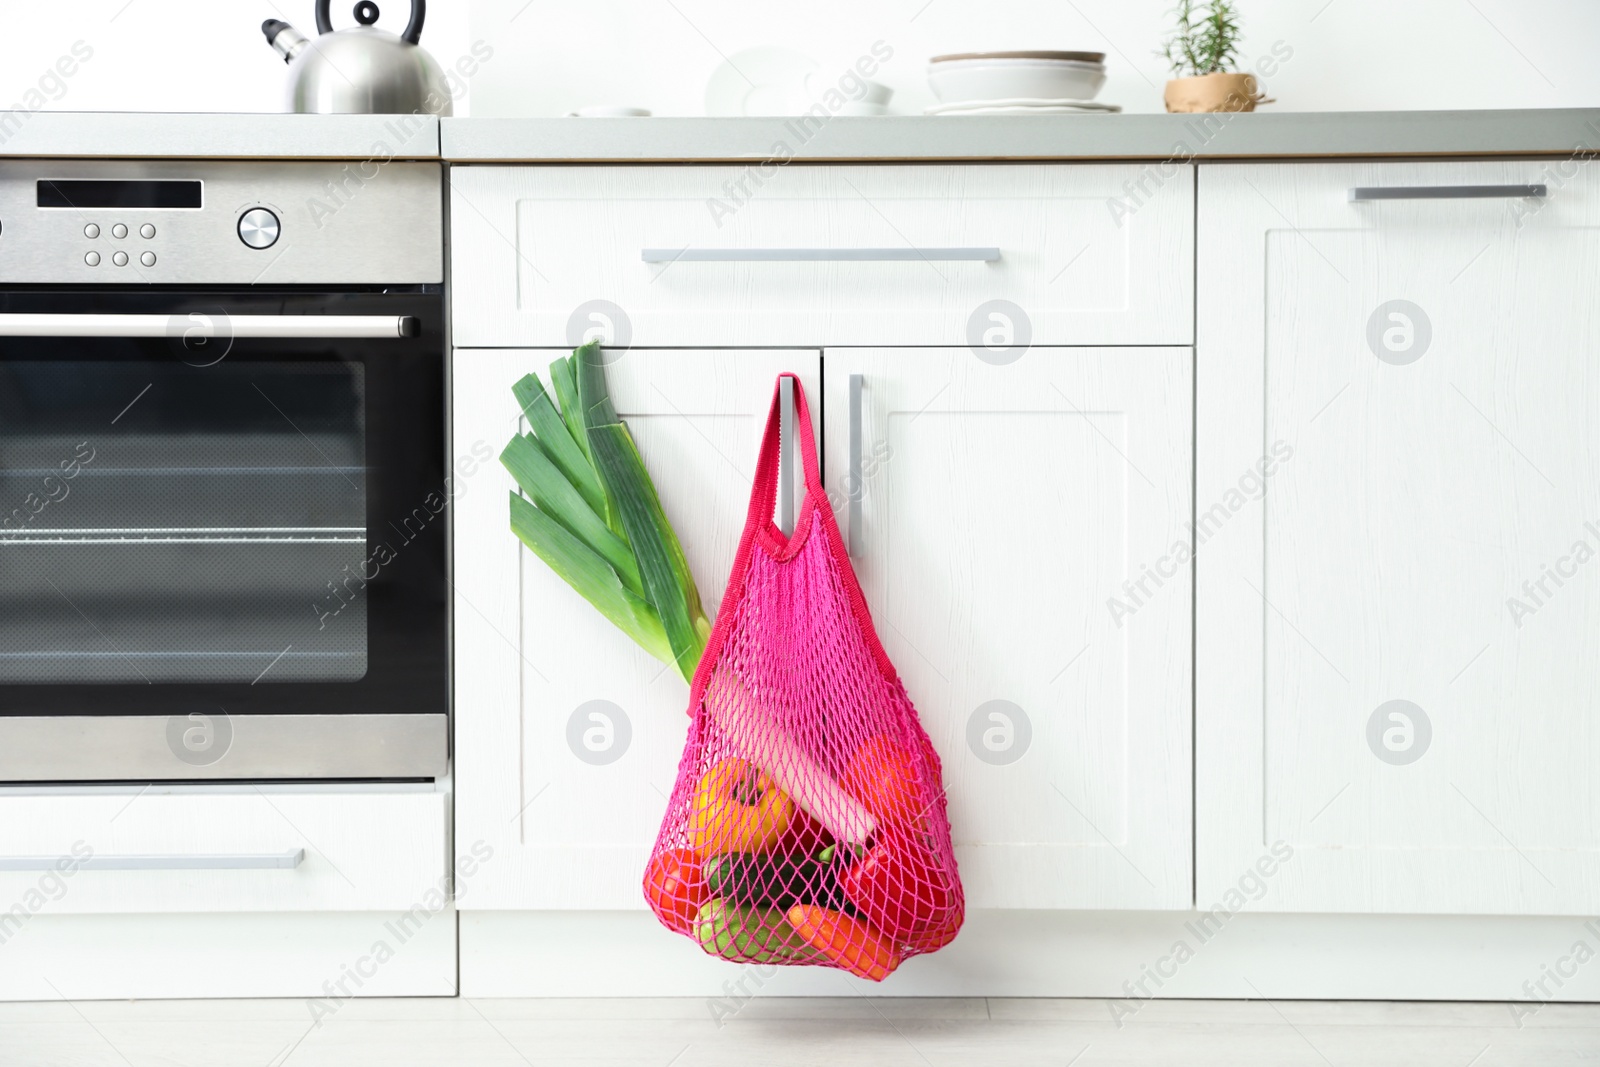 Photo of Net bag with vegetables hanging on cabinet door in kitchen